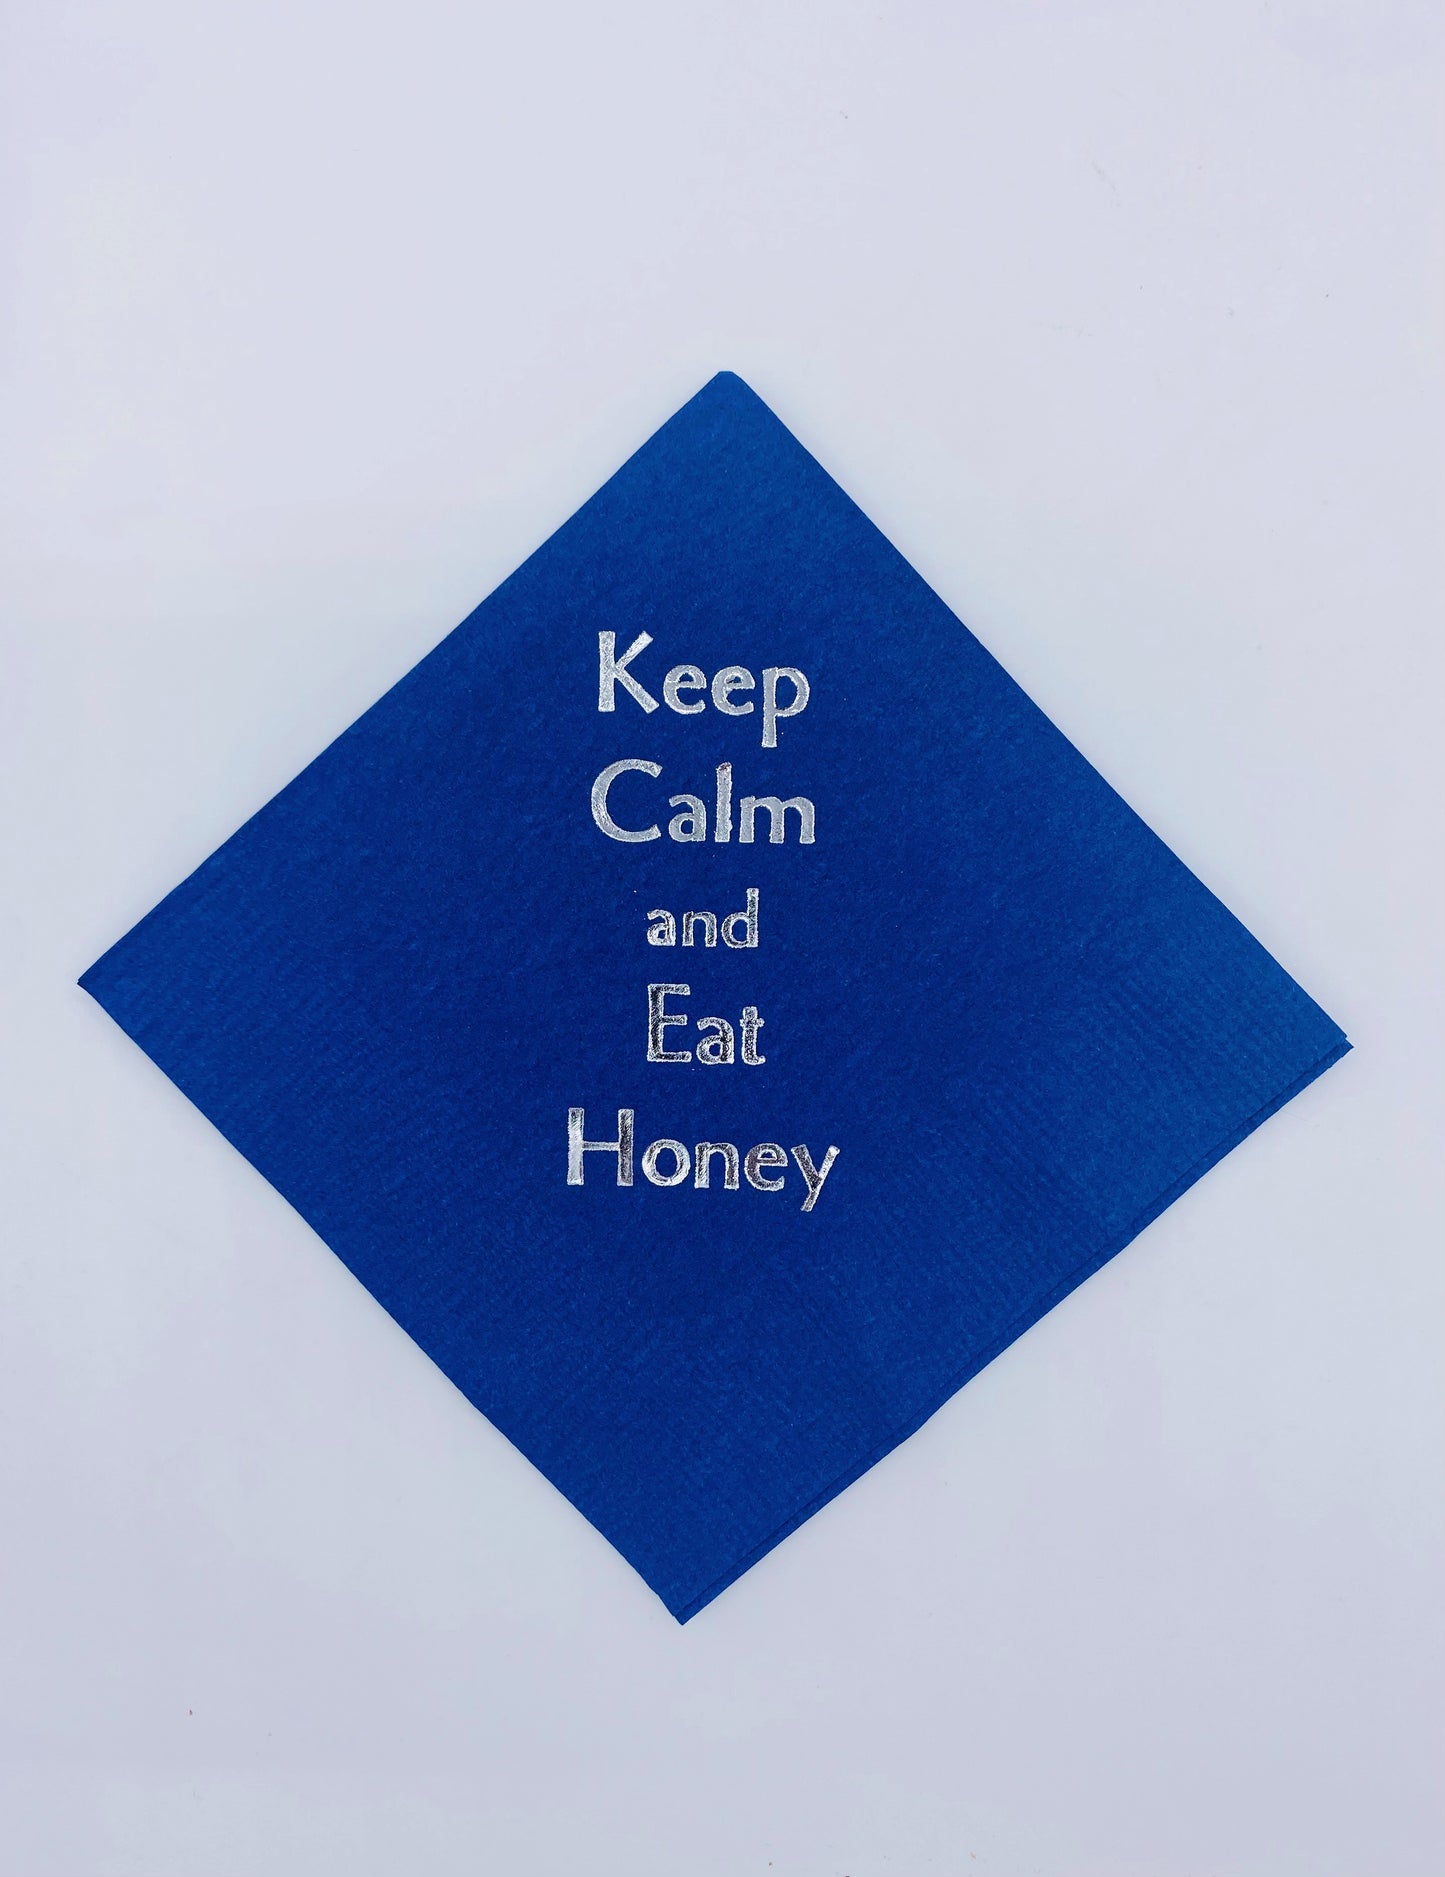 High Holidays Cocktail Napkins (25 Count) "Keep Calm Eat Honey"